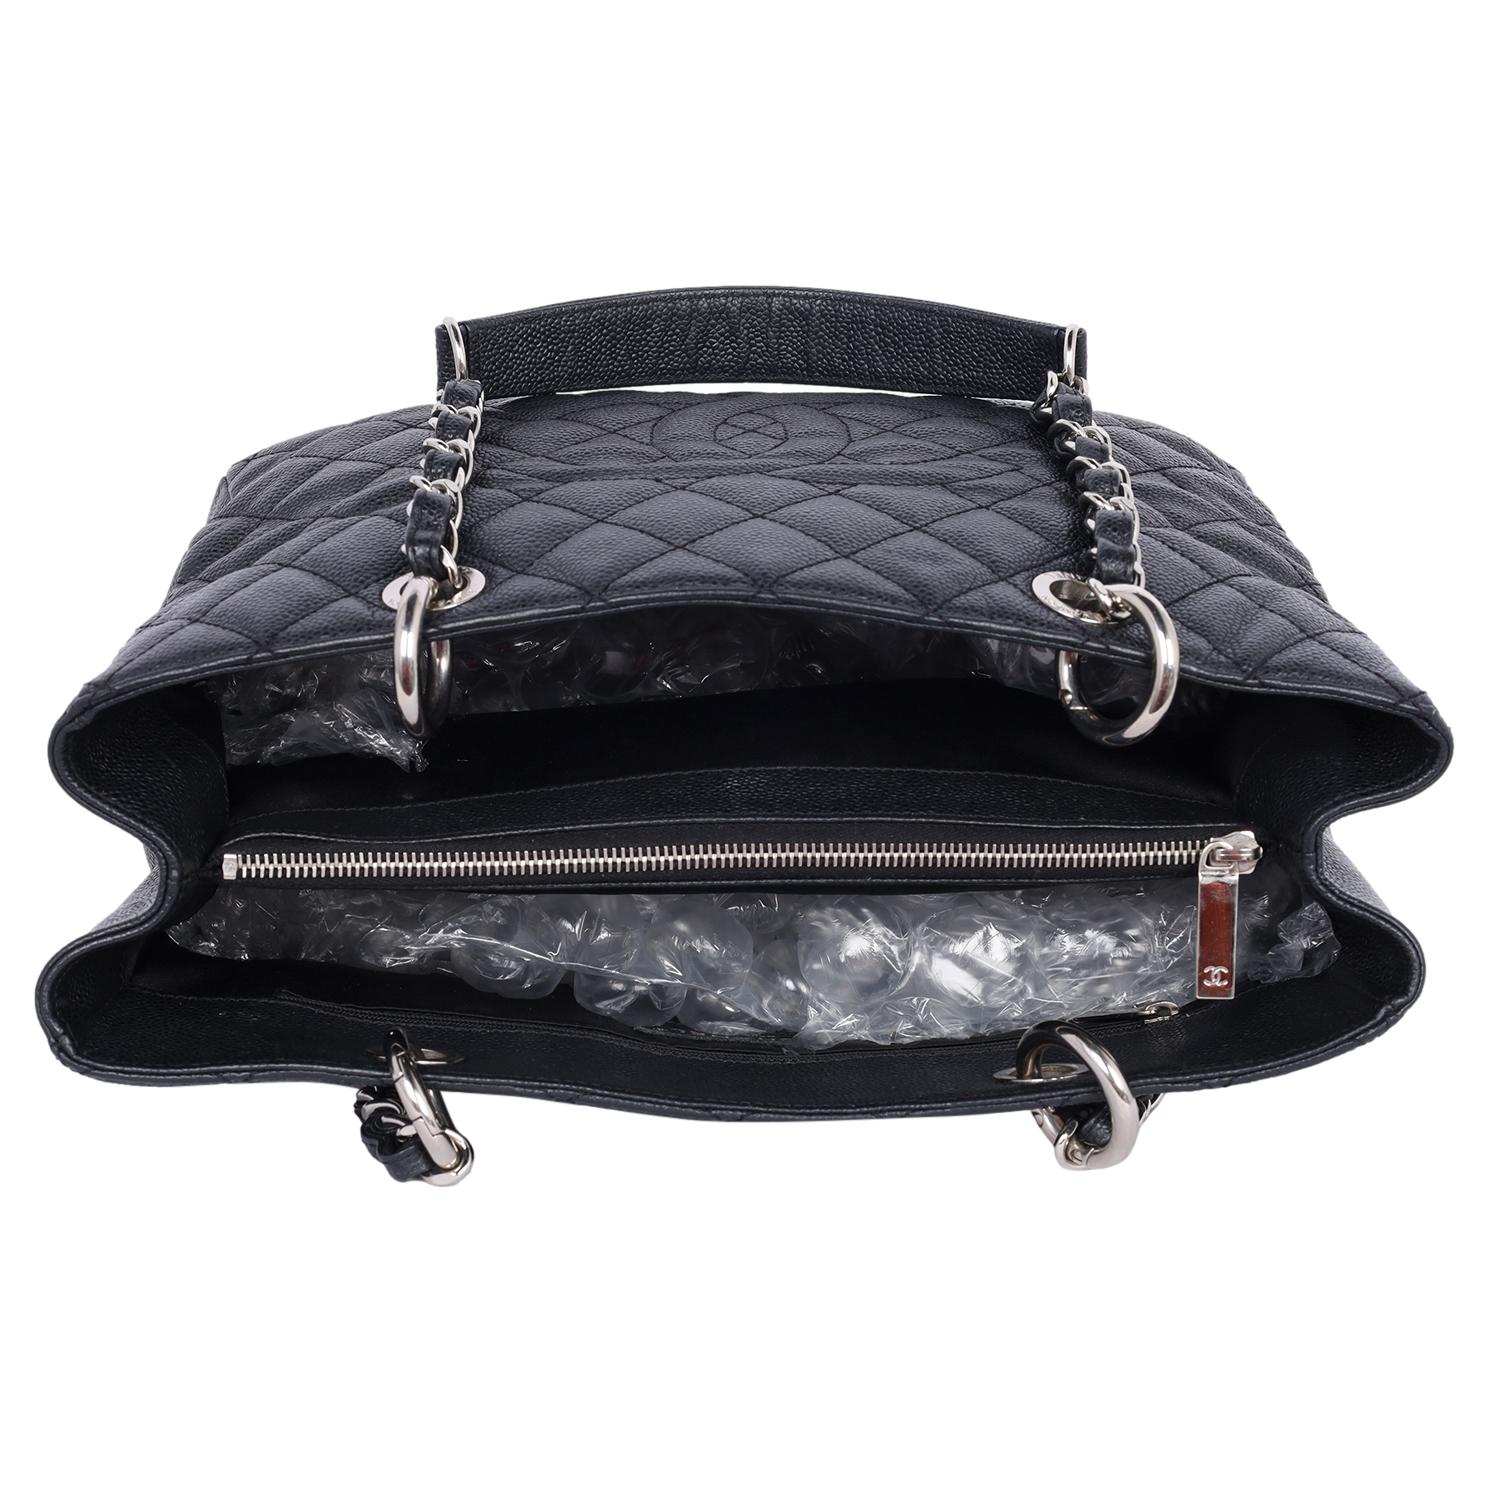 Chanel Caviar Leather Grand Shopping Tote Black 6